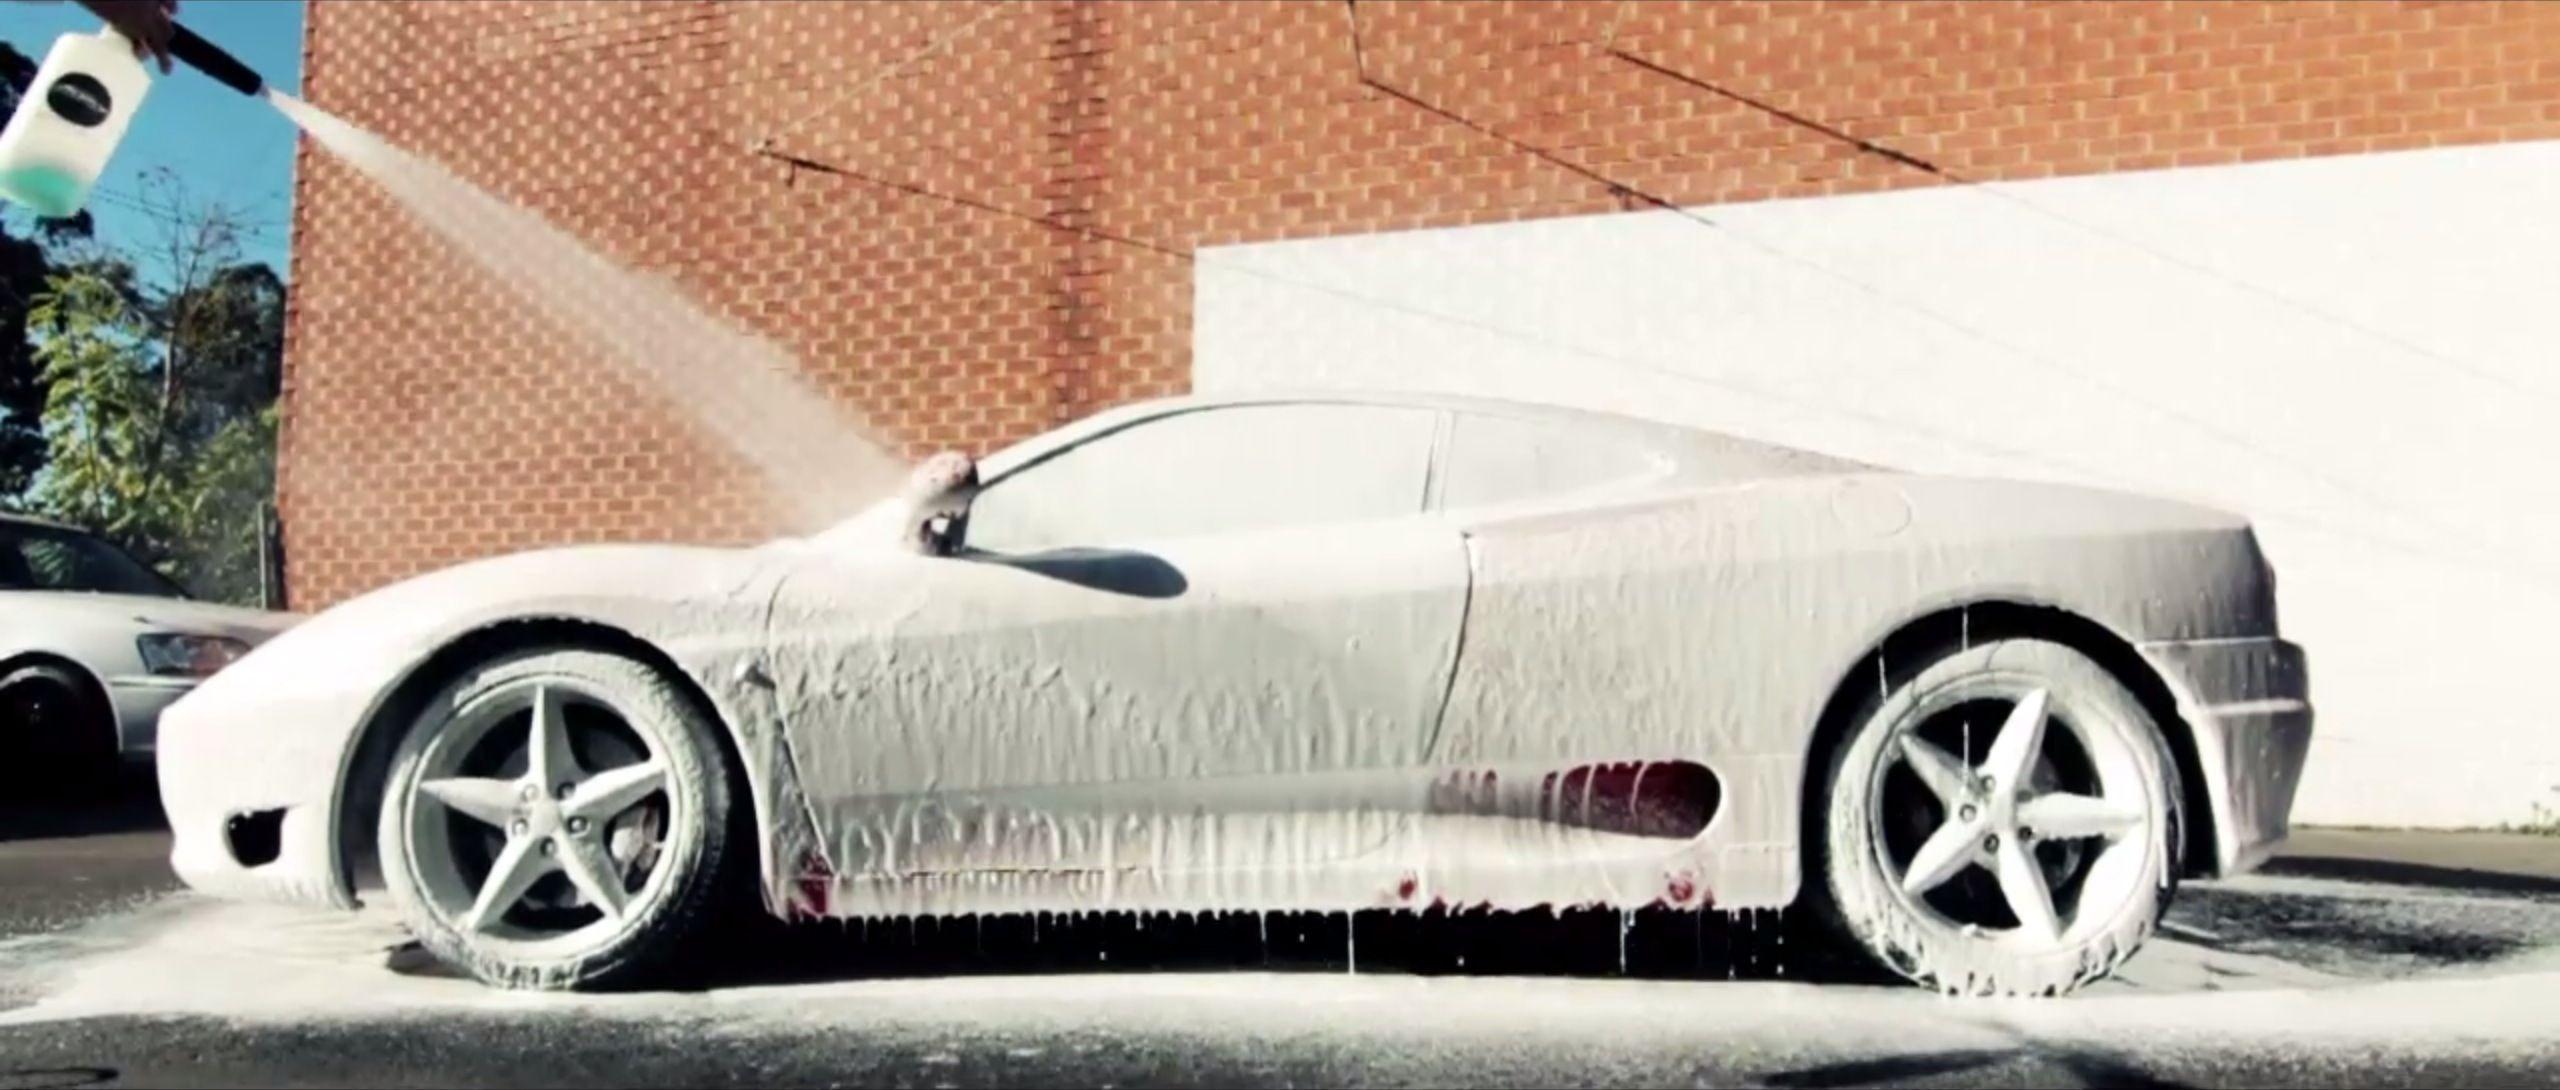 Foam Wash. The Quick Car Wash